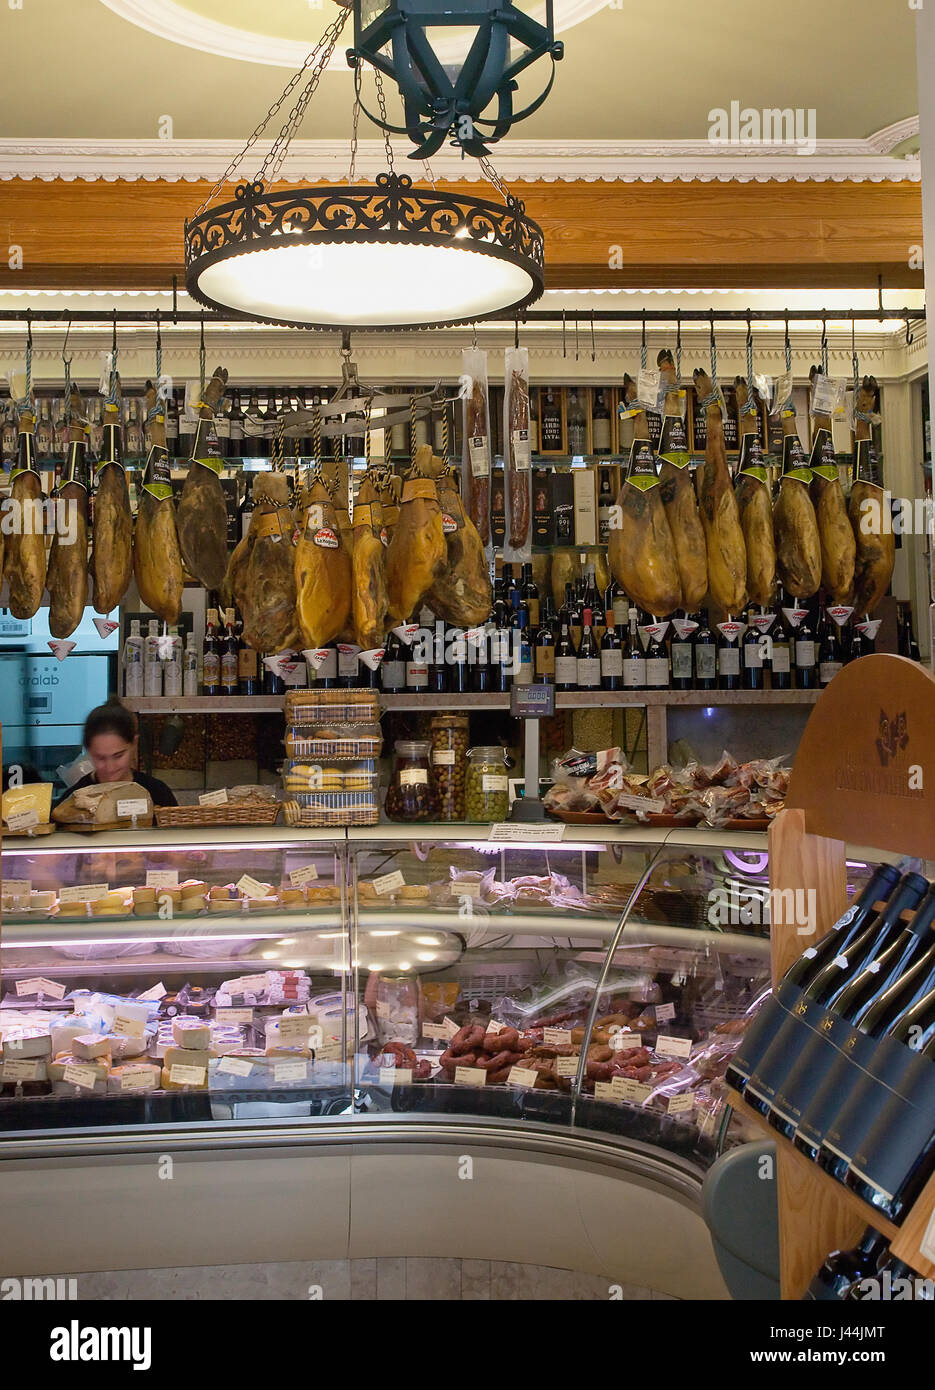 Portugal, Estredmadura, Lisbon, Baixa, Interior of delicatessen with hanging Presunto hams Stock Photo